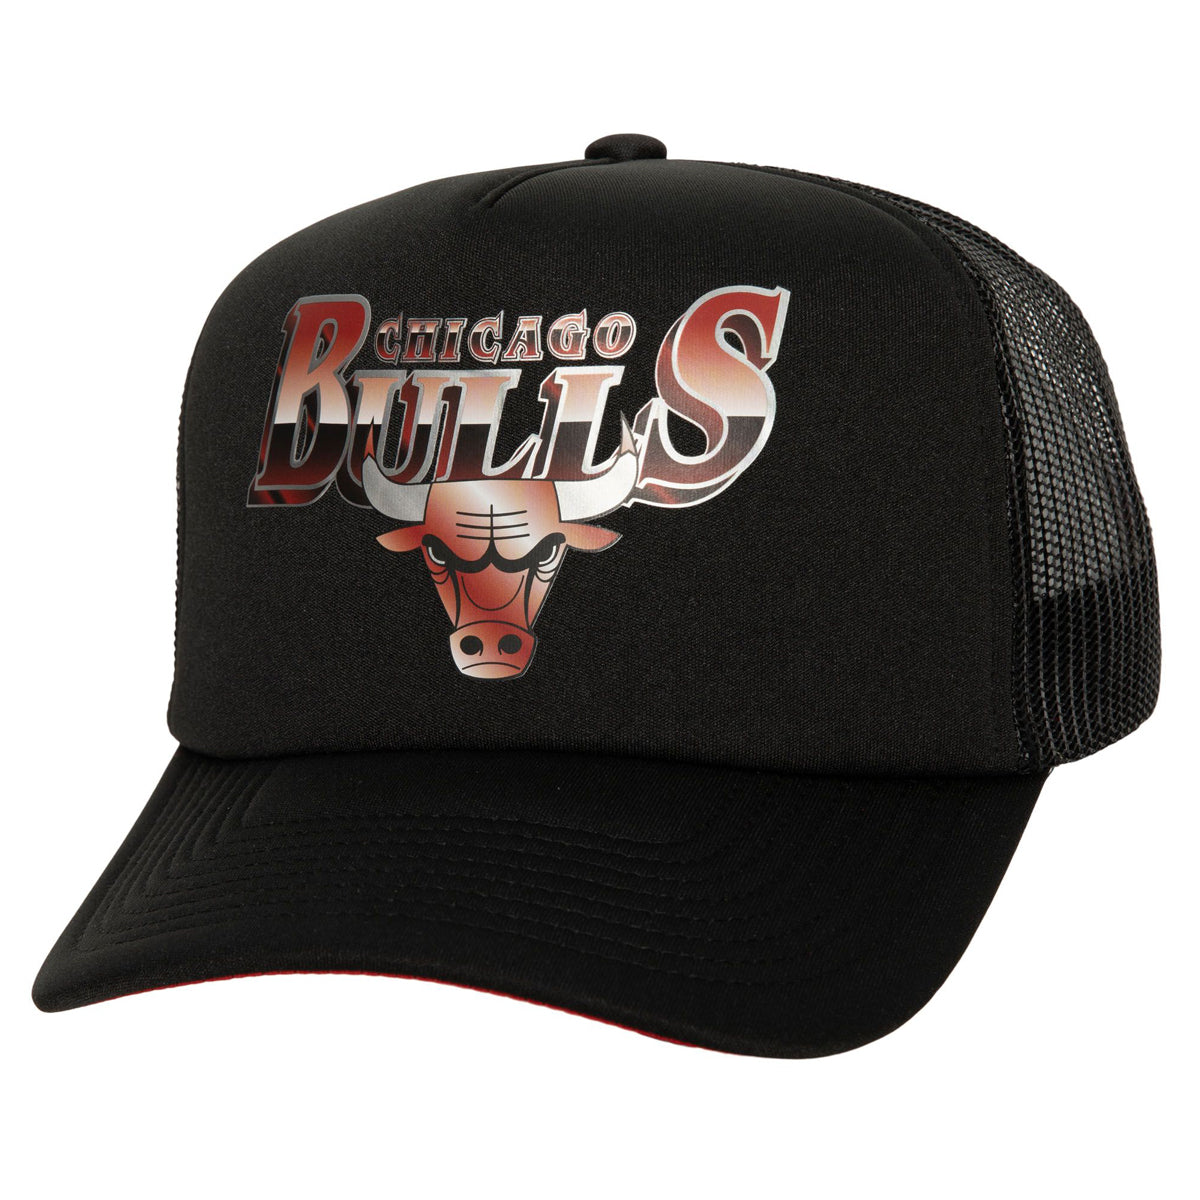 Mitchell & Ness x NBA Rock On Trucker Bulls Hat - Black image 1